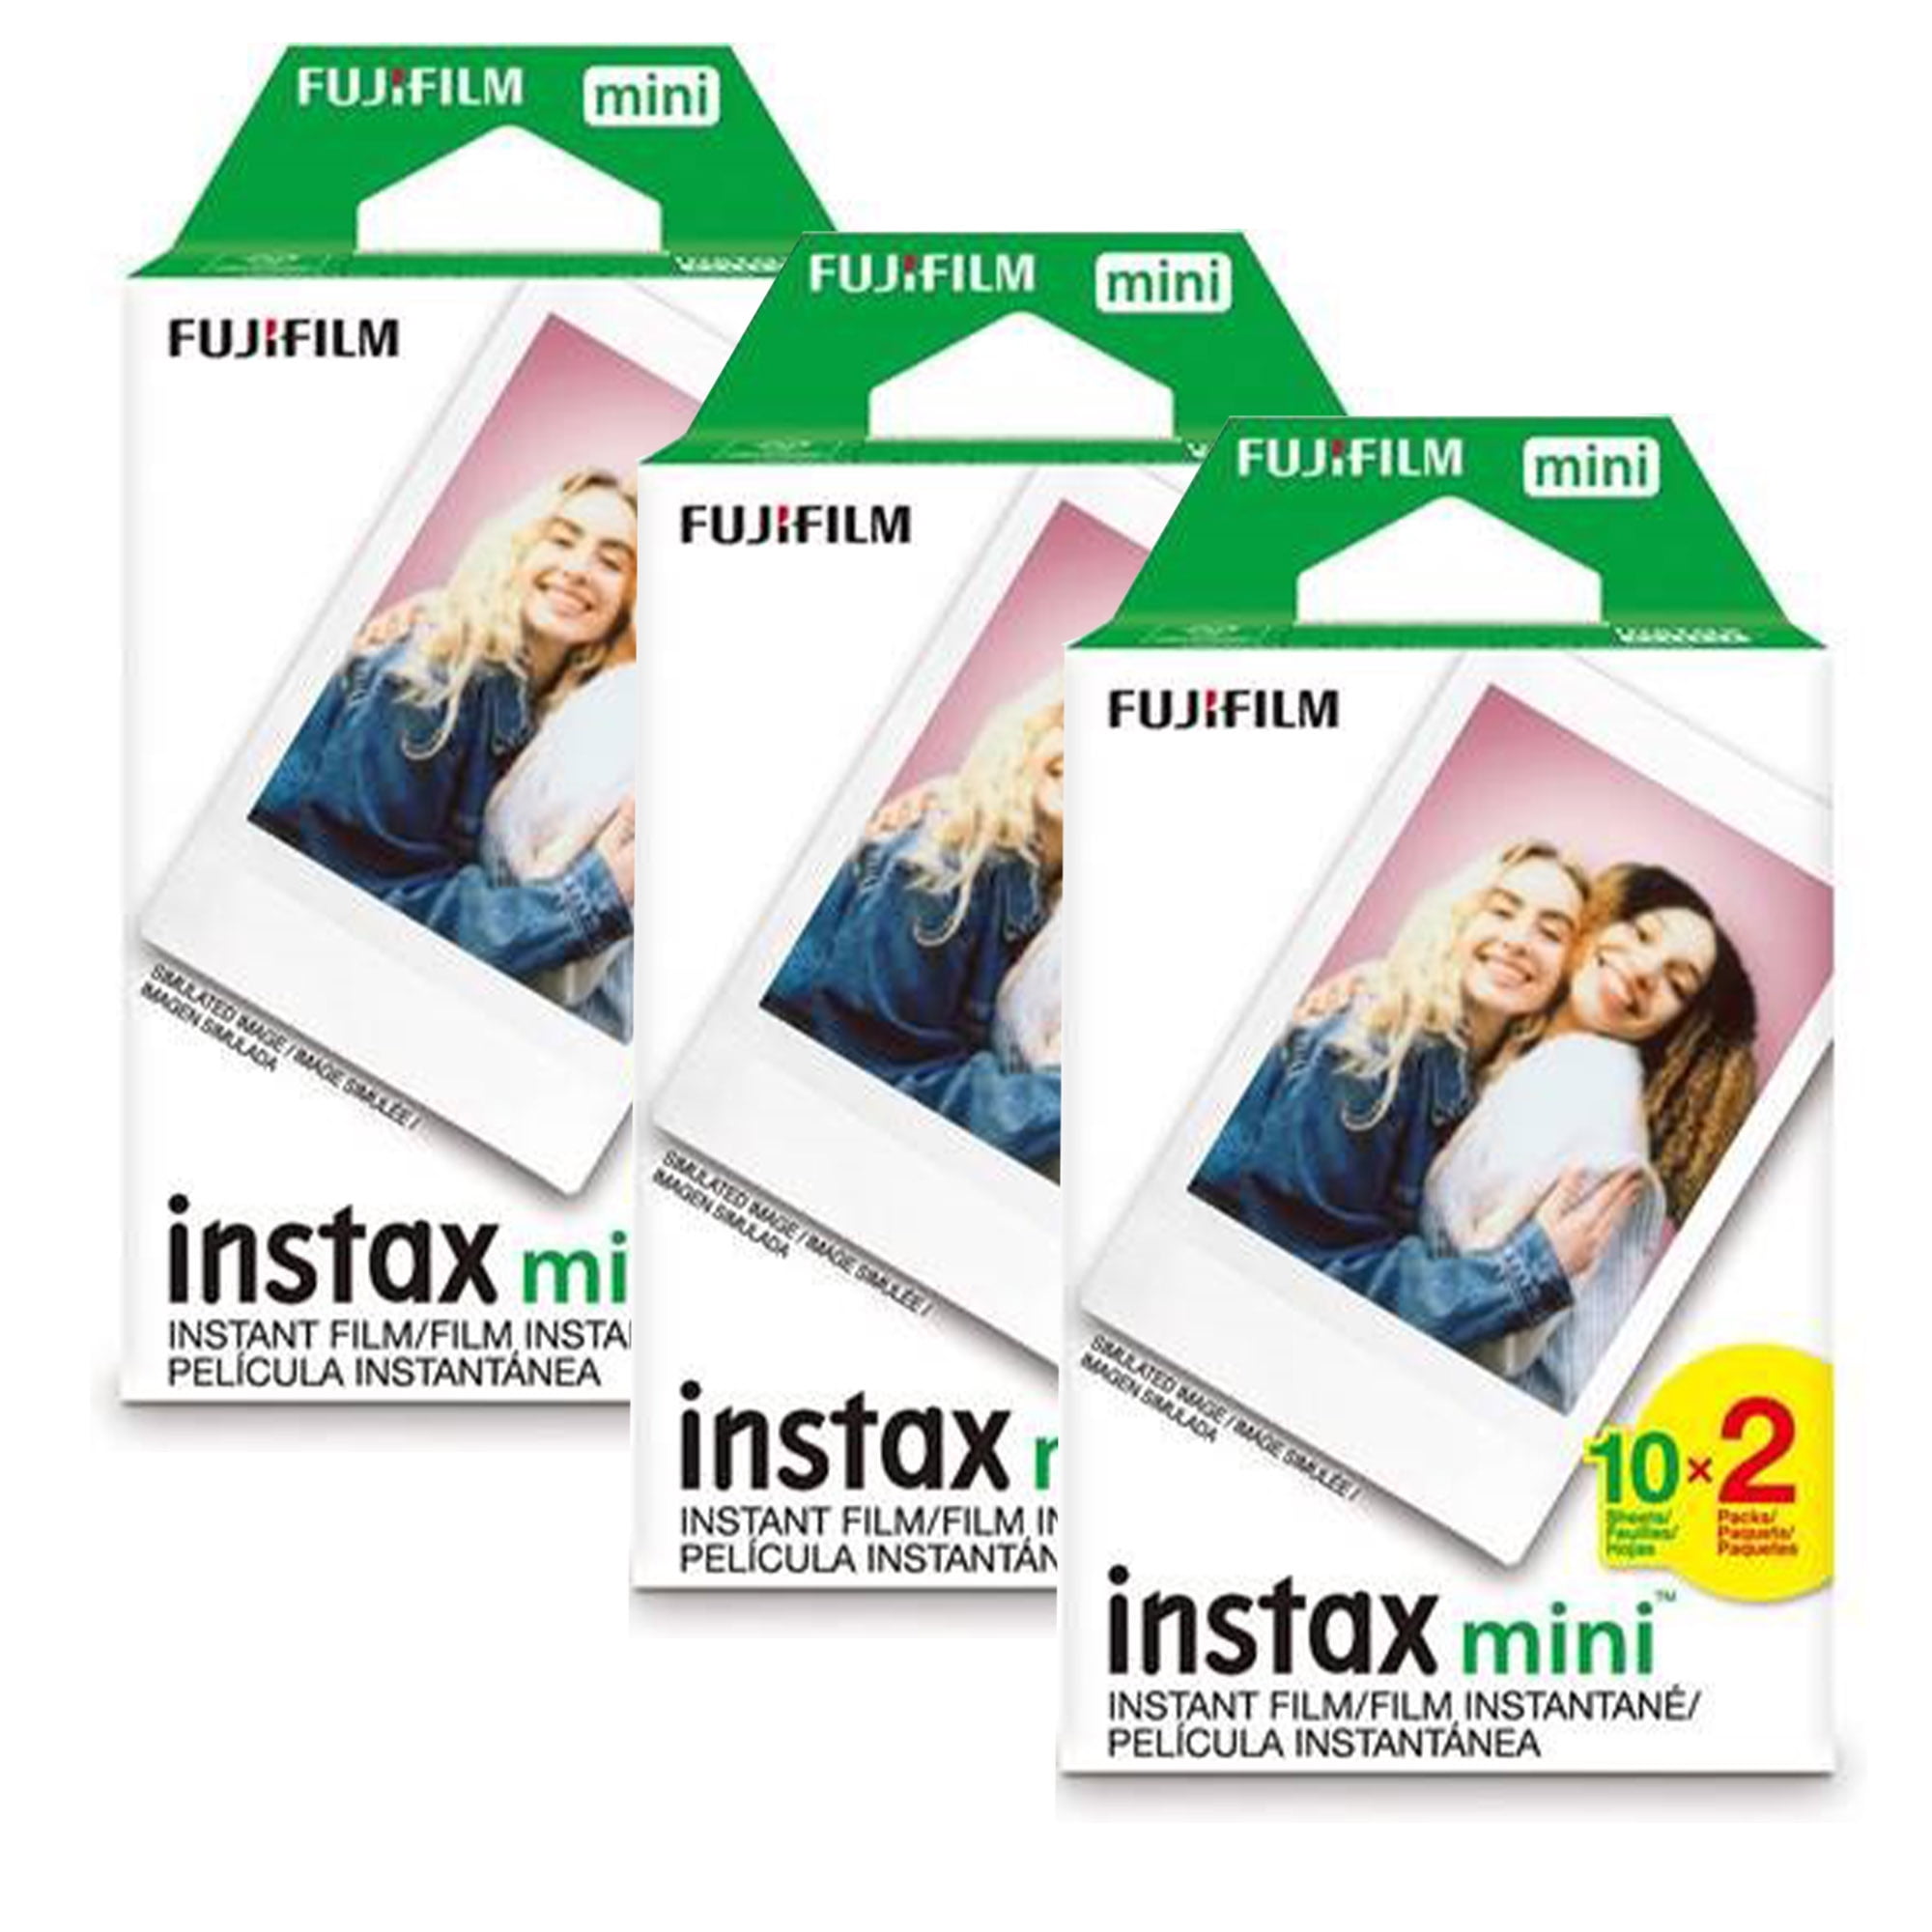 Fujifilm Instax Instant Film, 5 Pack Film Bundle Includes 50 Films